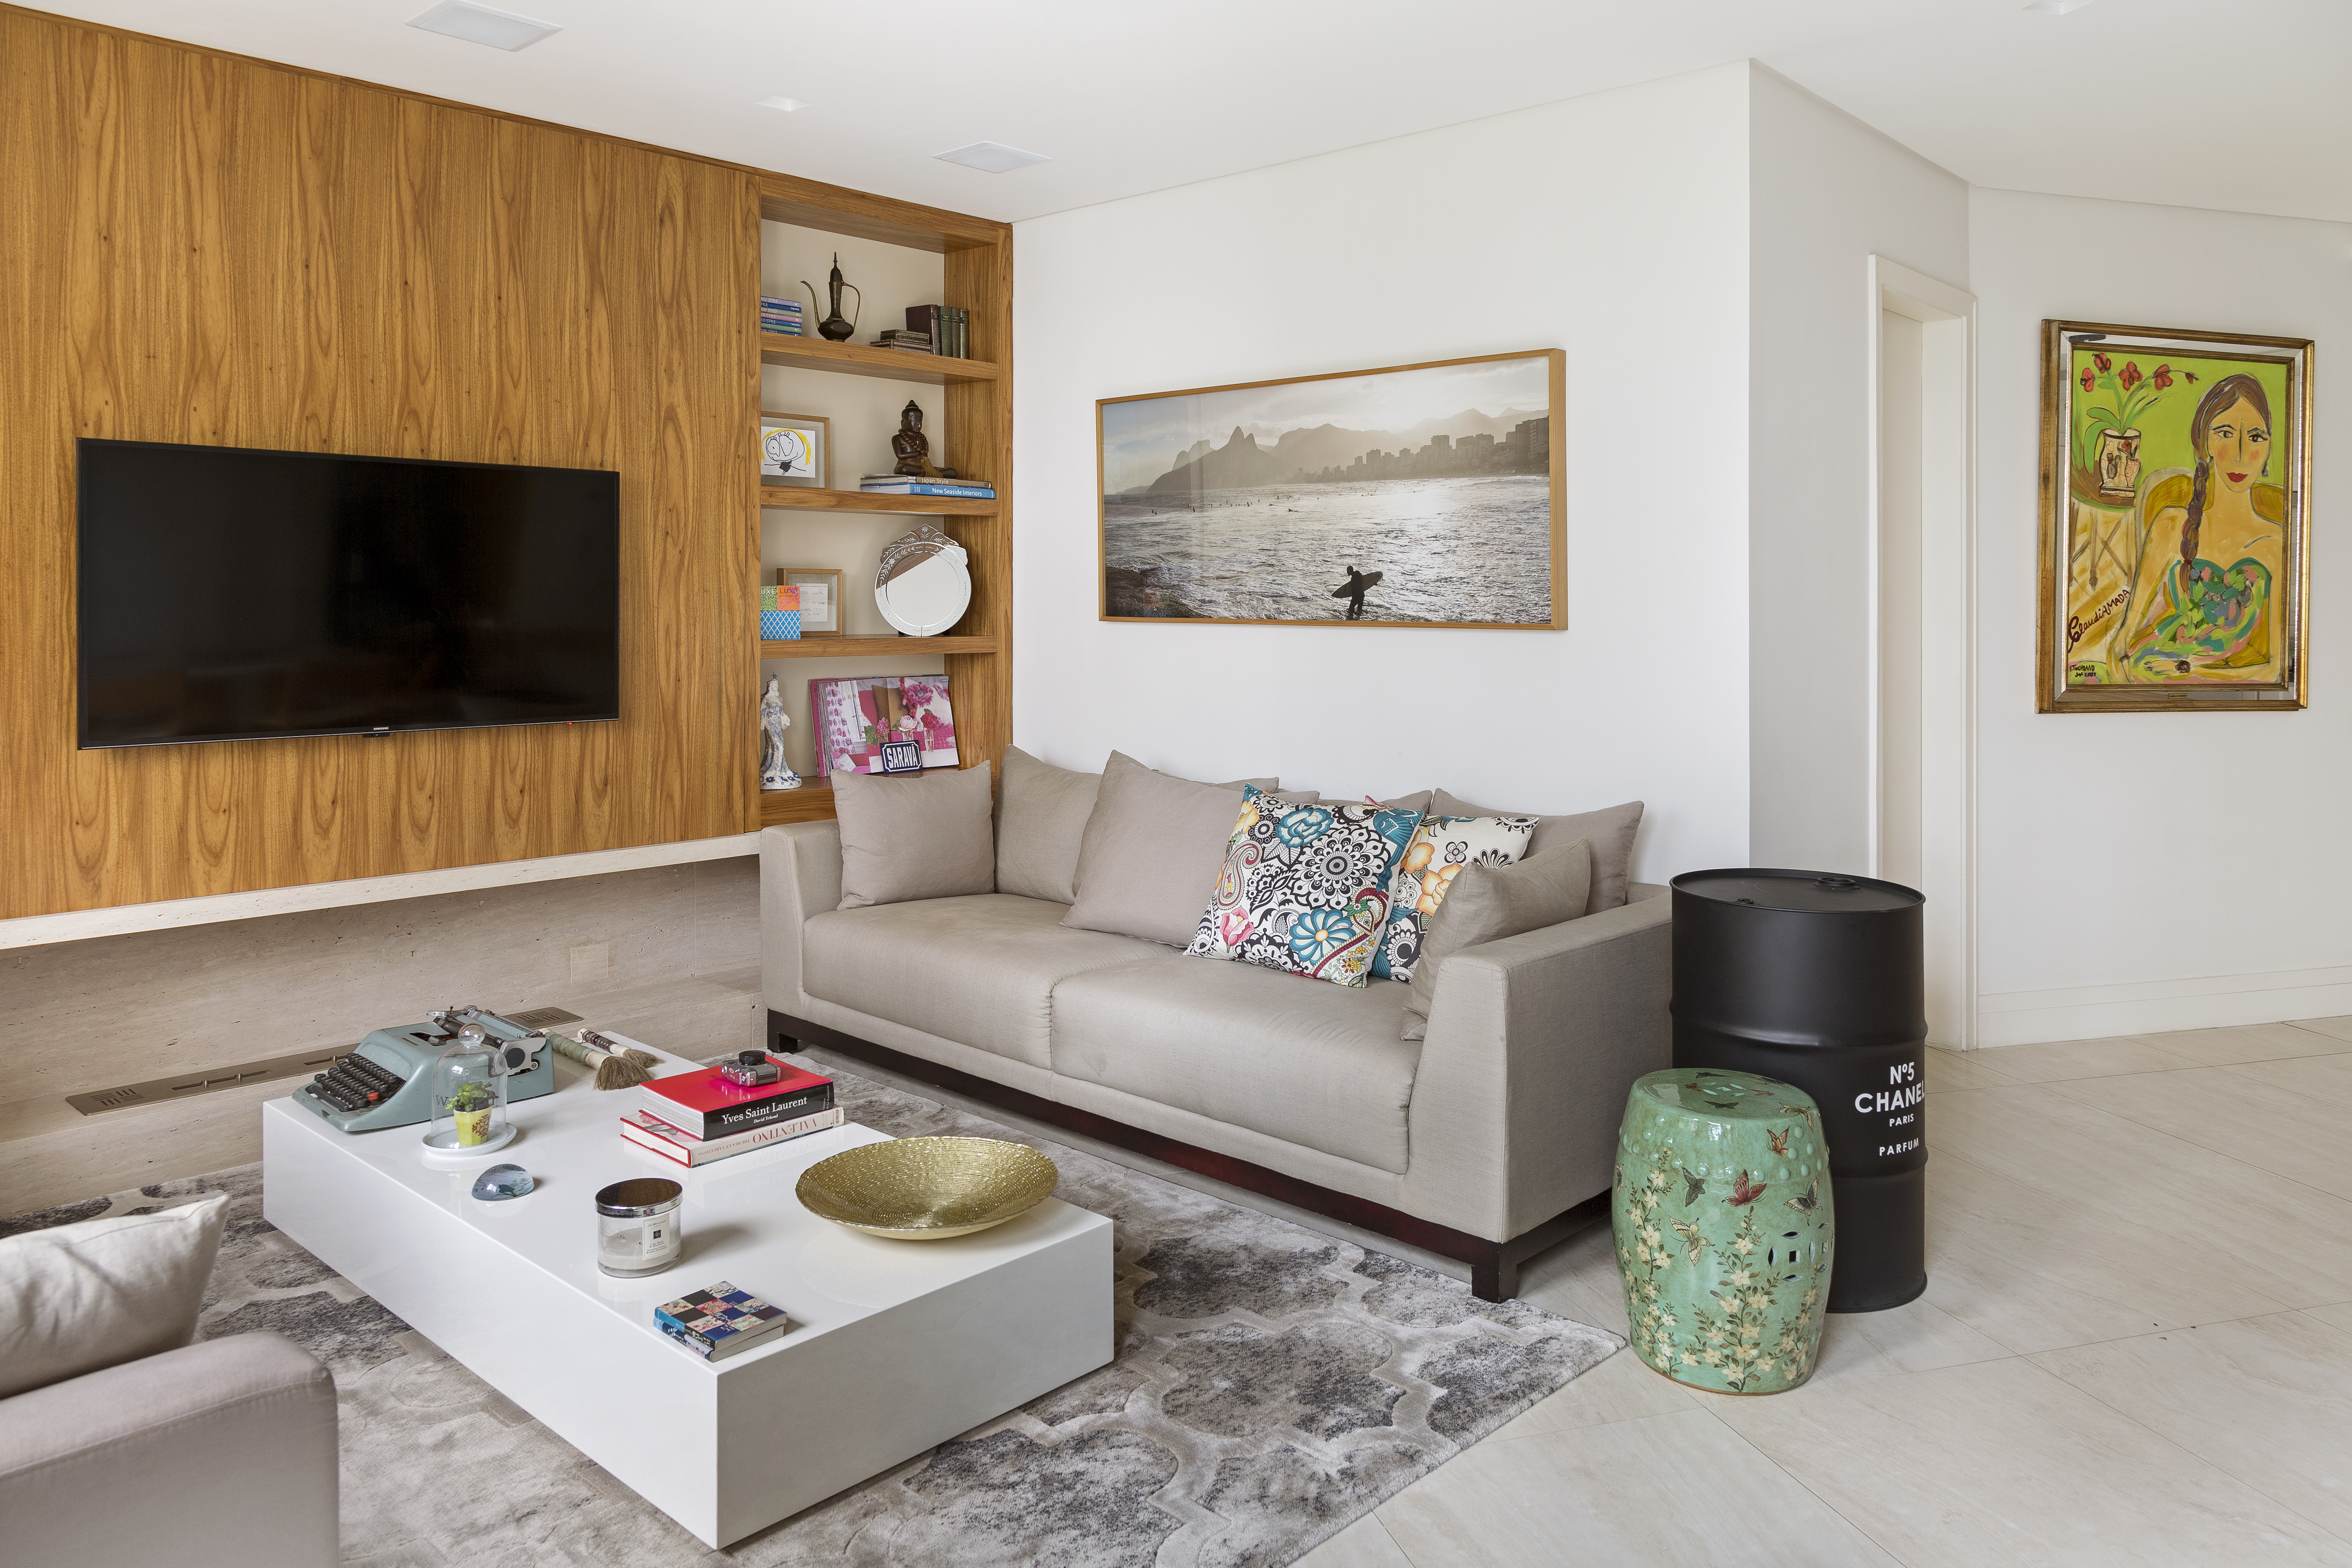 Sala de estar pequena com sofá cinza, tapete cinza, mesa de centro branca e parede revestida de madeira.